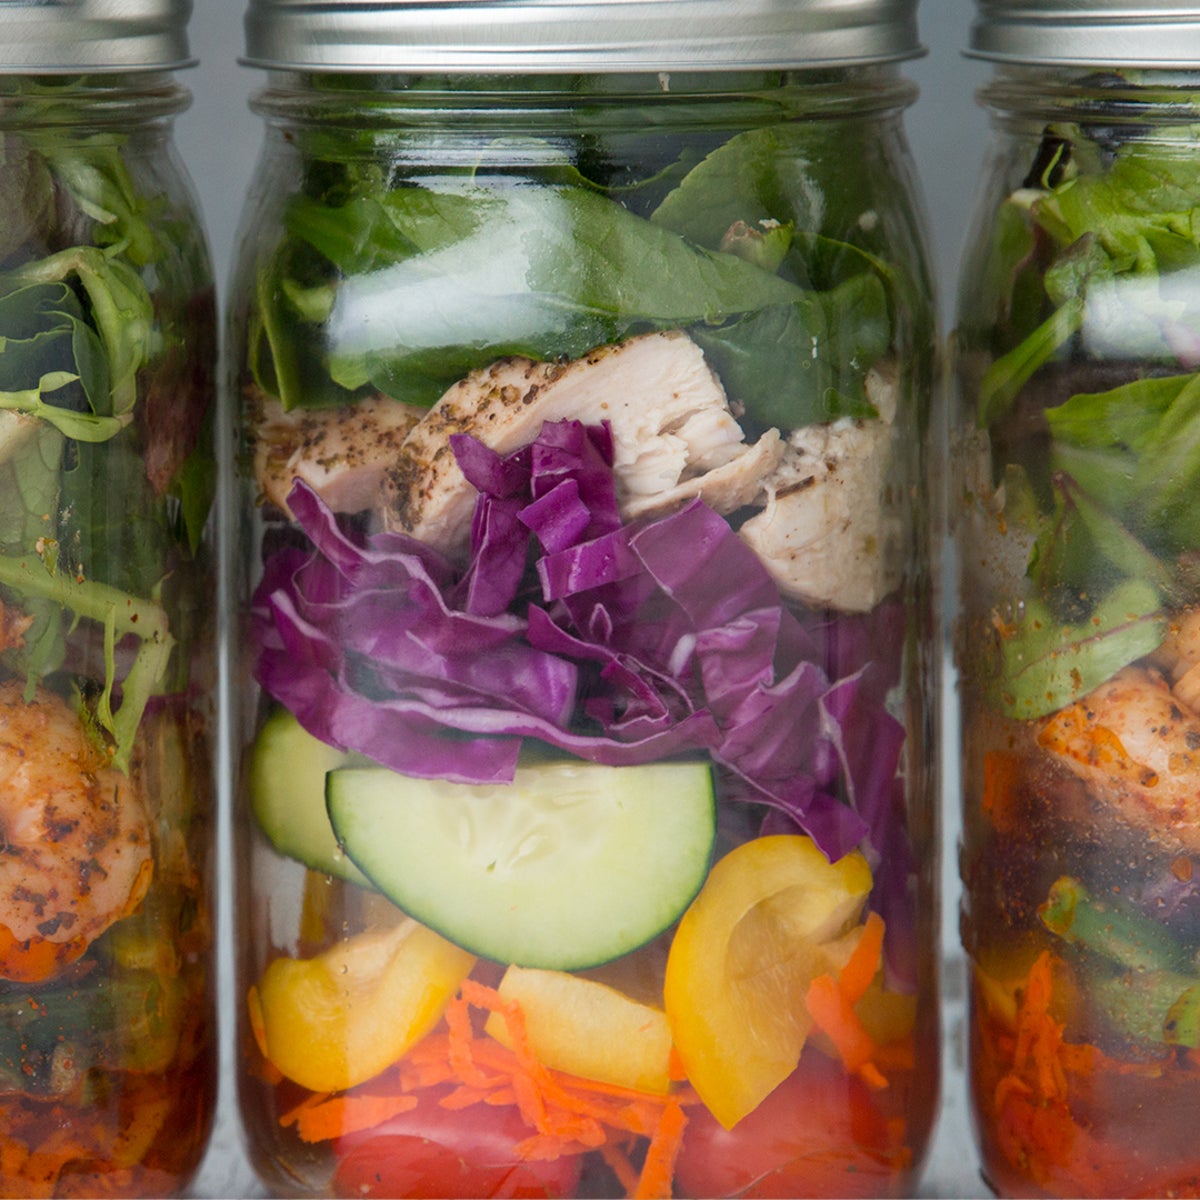 Salad Jars Are The Meal-Prep Hack For Total Freshness